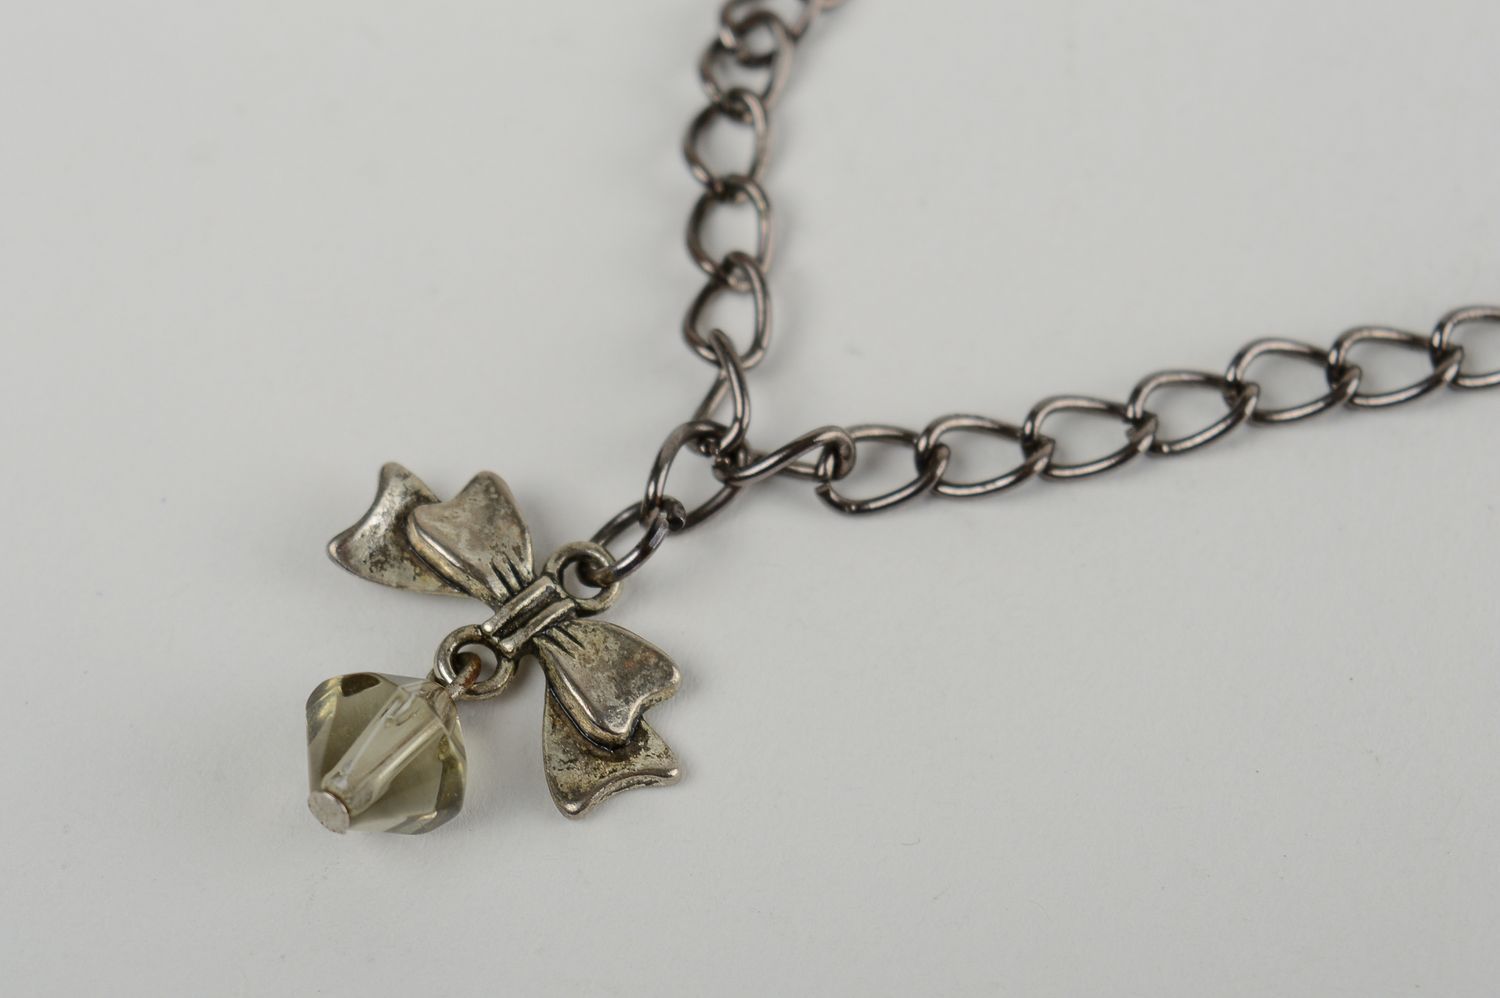 Unusual handmade metal bracelet chain bracelet with charms fashion trends photo 5